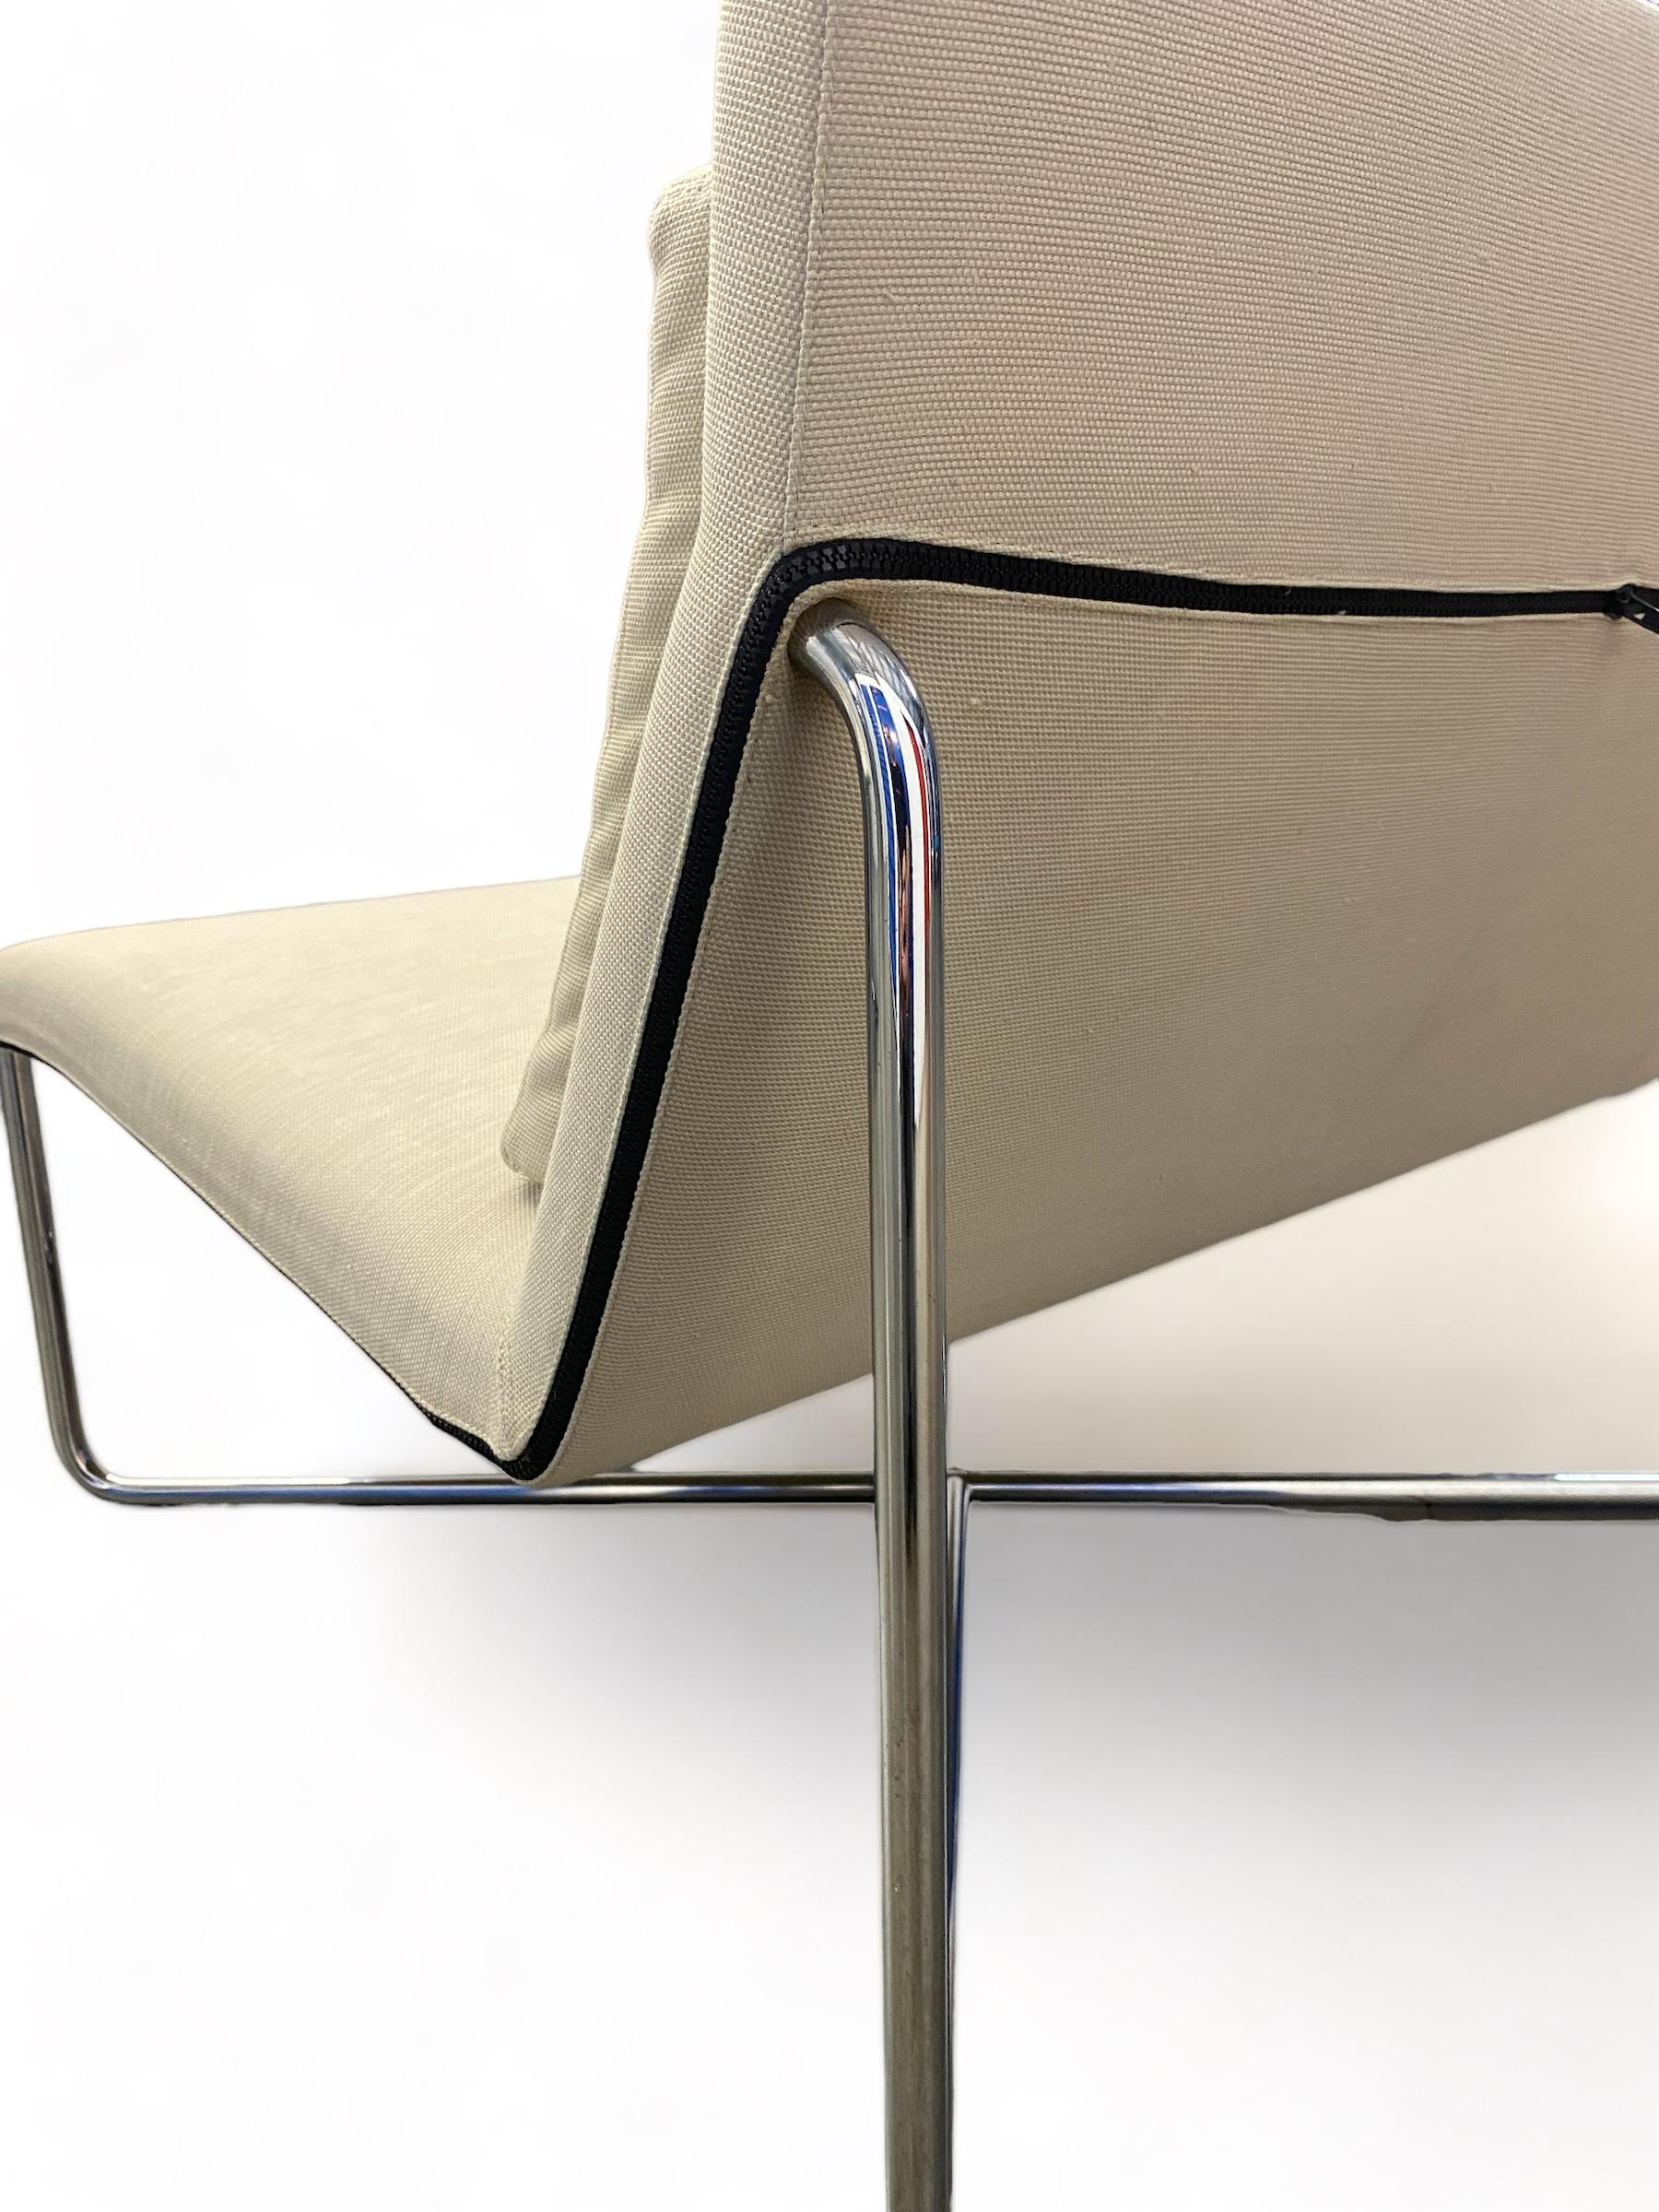 White Diller chair designed by Rodolfo Dordoni for Minotti, Italy. 3